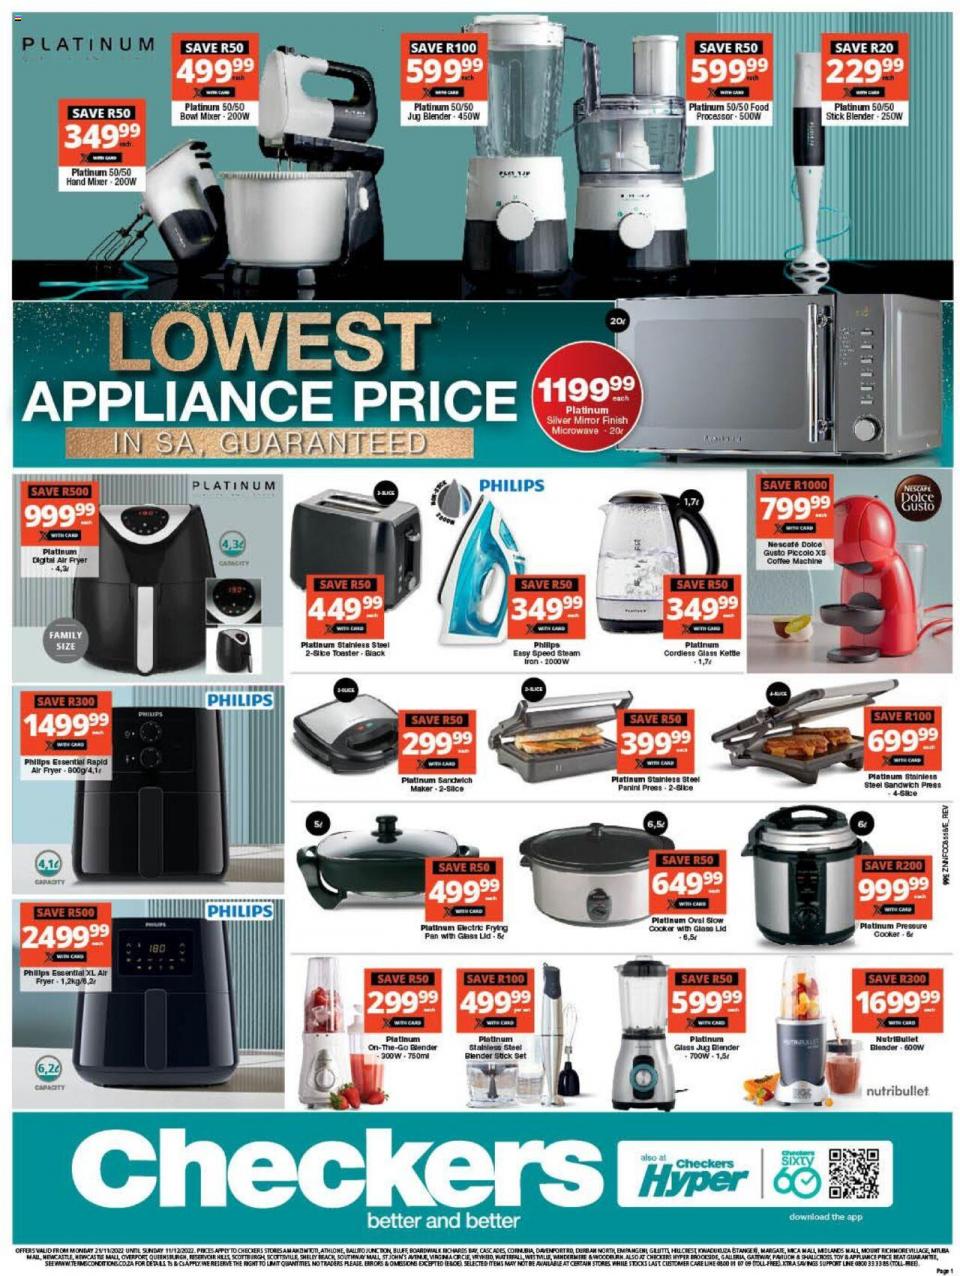 Checkers Specials Appliance Promotion 21 Nov – 11 Dec 2022